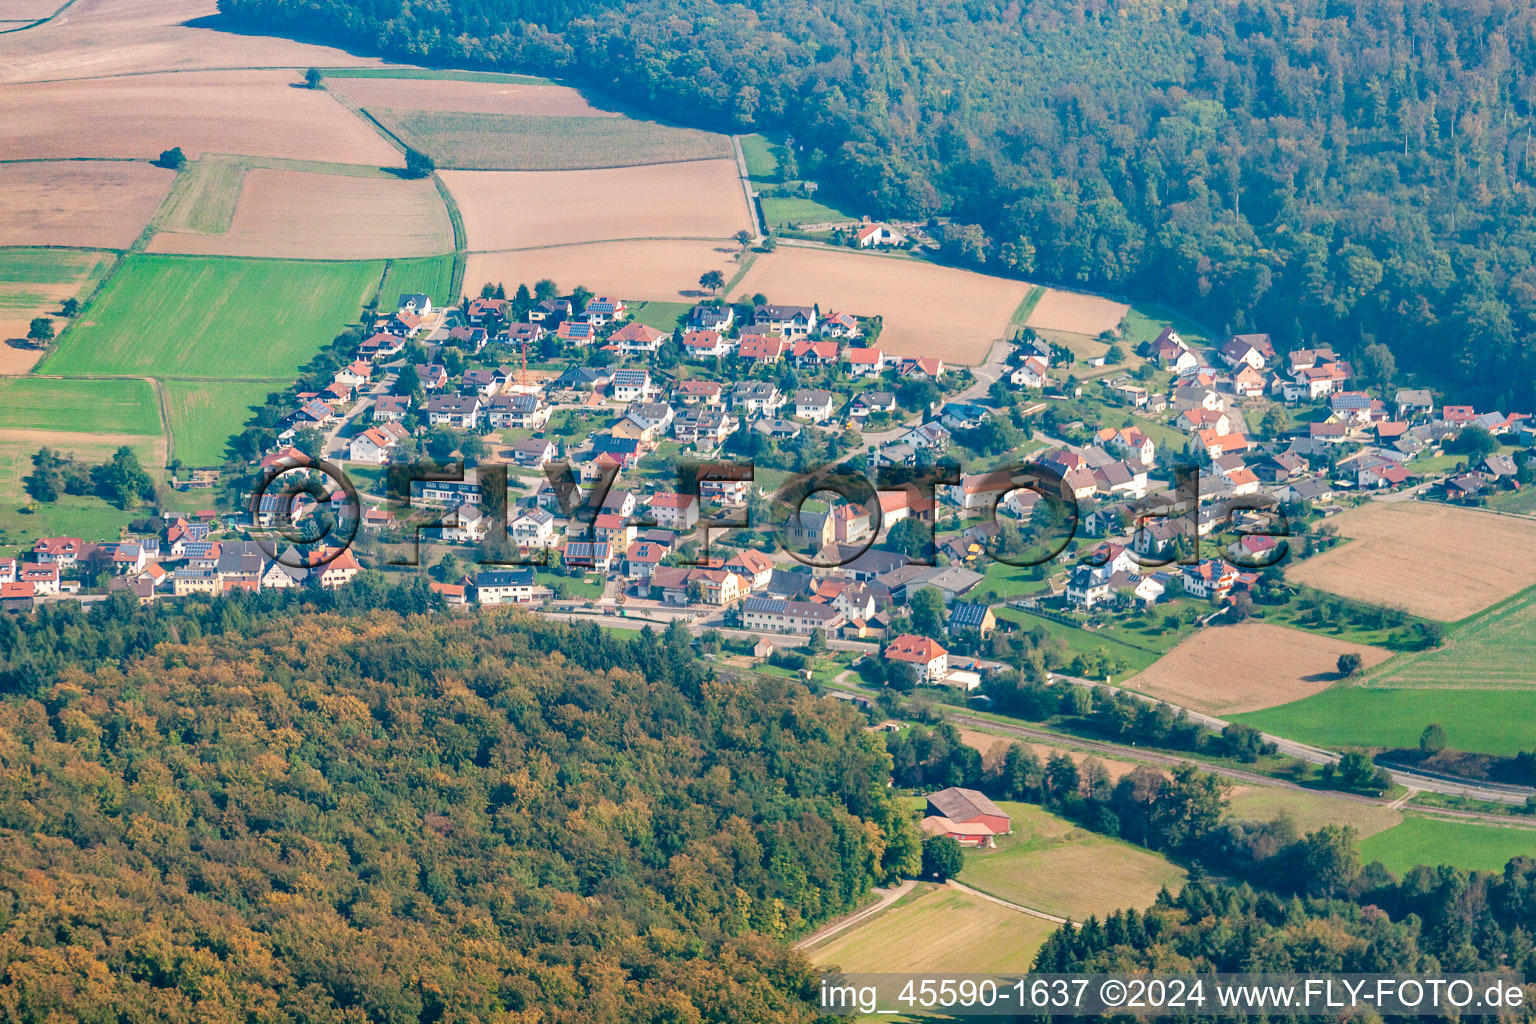 Vue aérienne de Neckarbischofsheim dans le département Bade-Wurtemberg, Allemagne